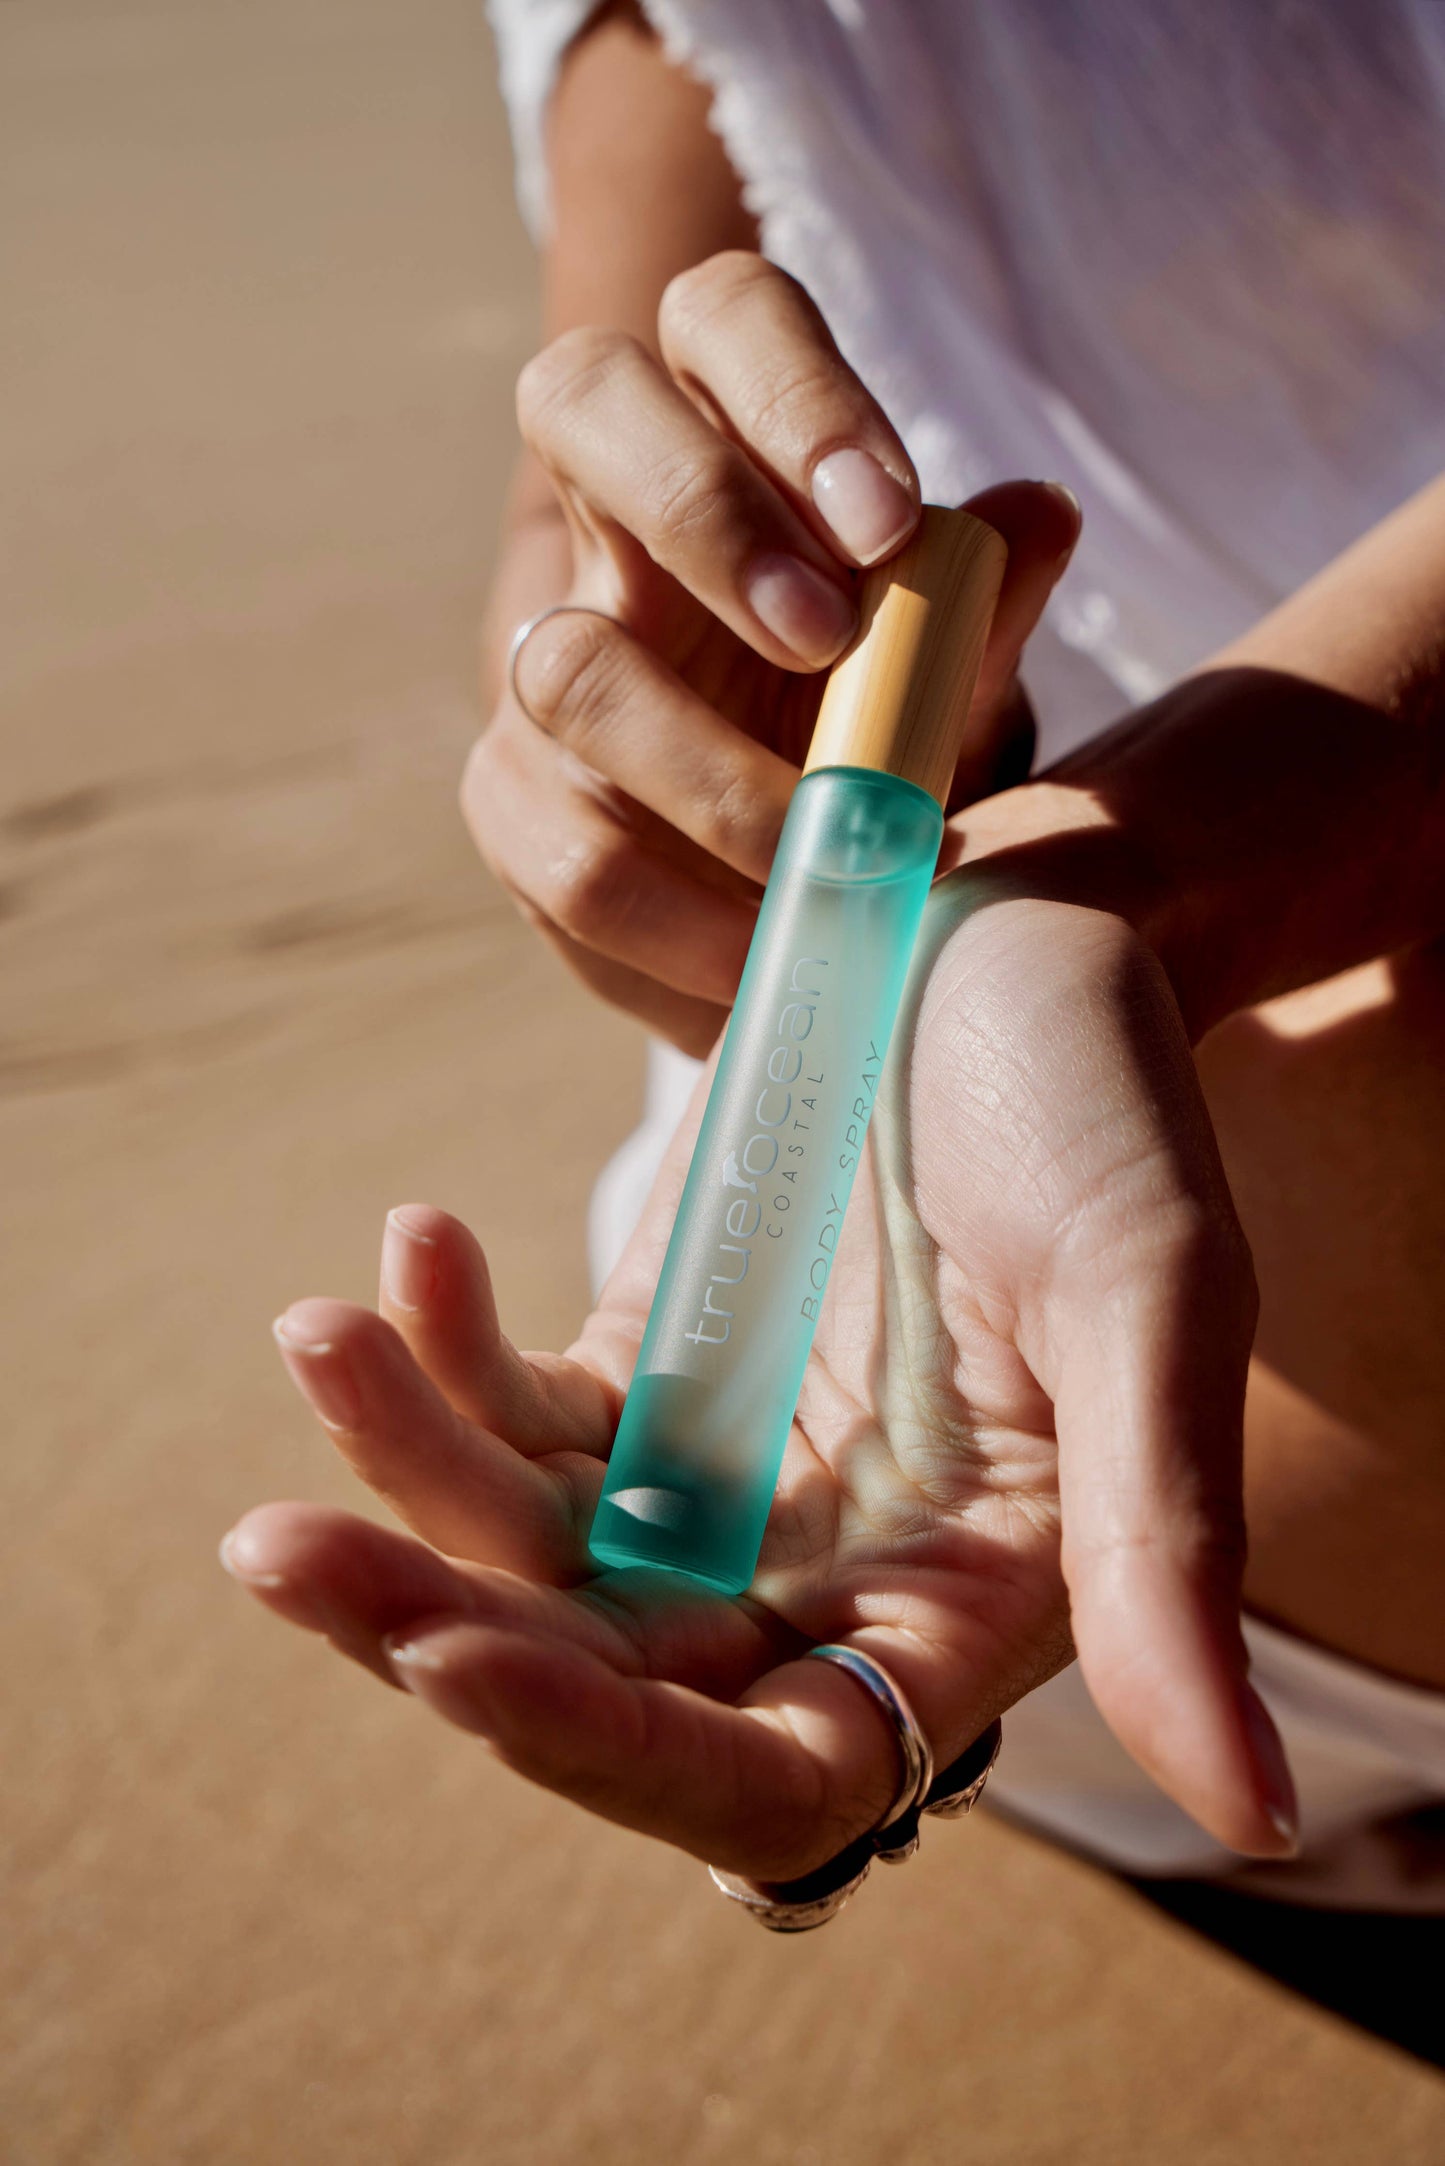 True Ocean - Body Spray - Pocket Size, 10 ml